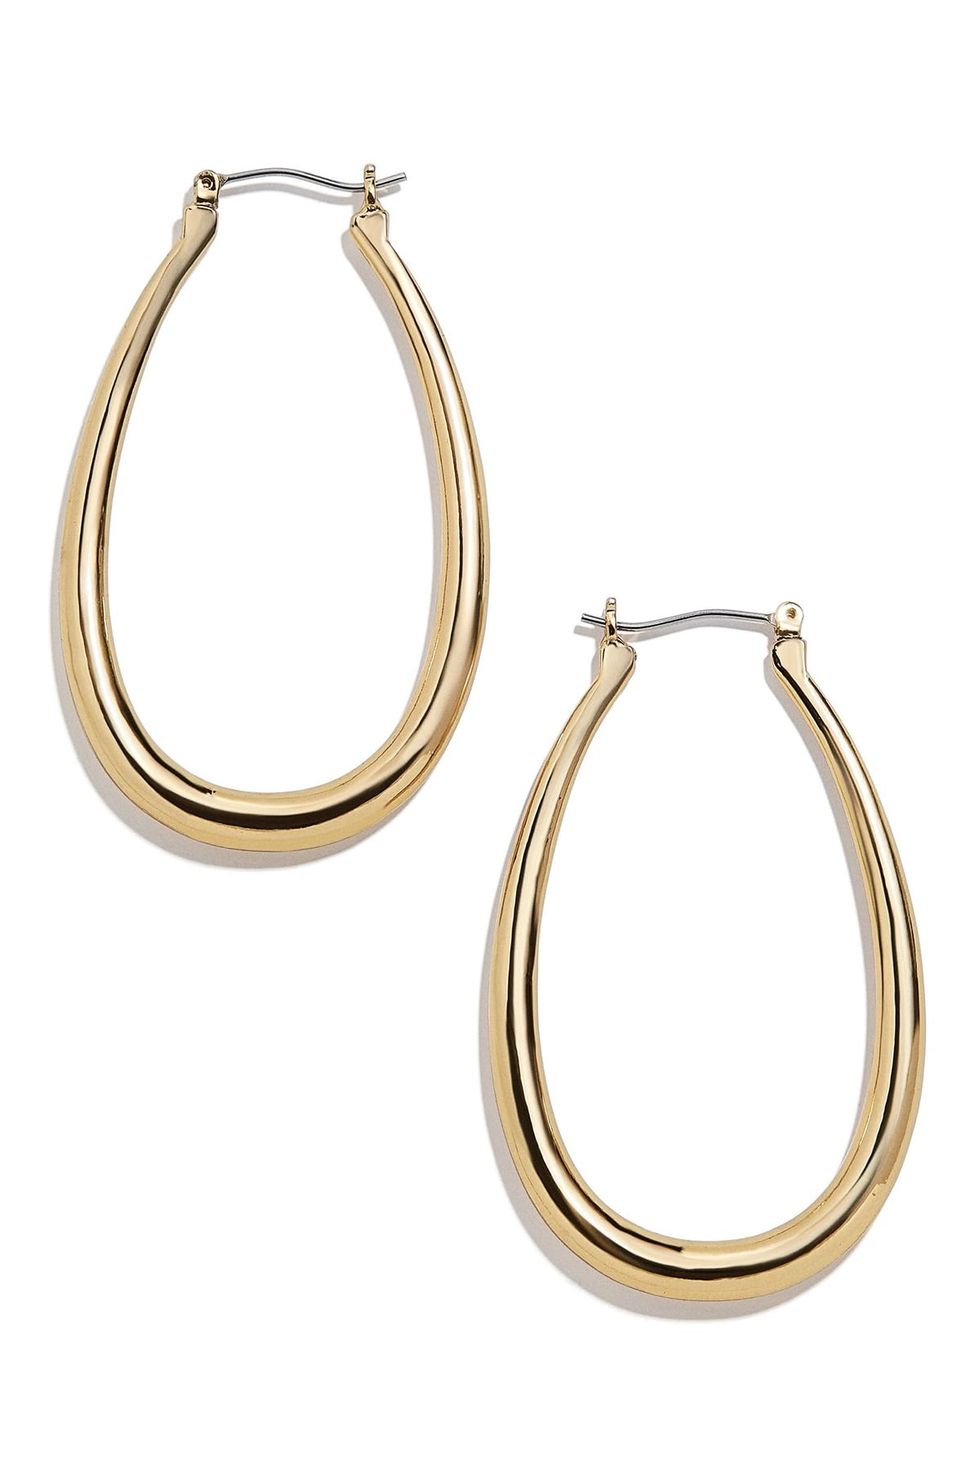 Baublebar Louise 18K Gold Earring Set